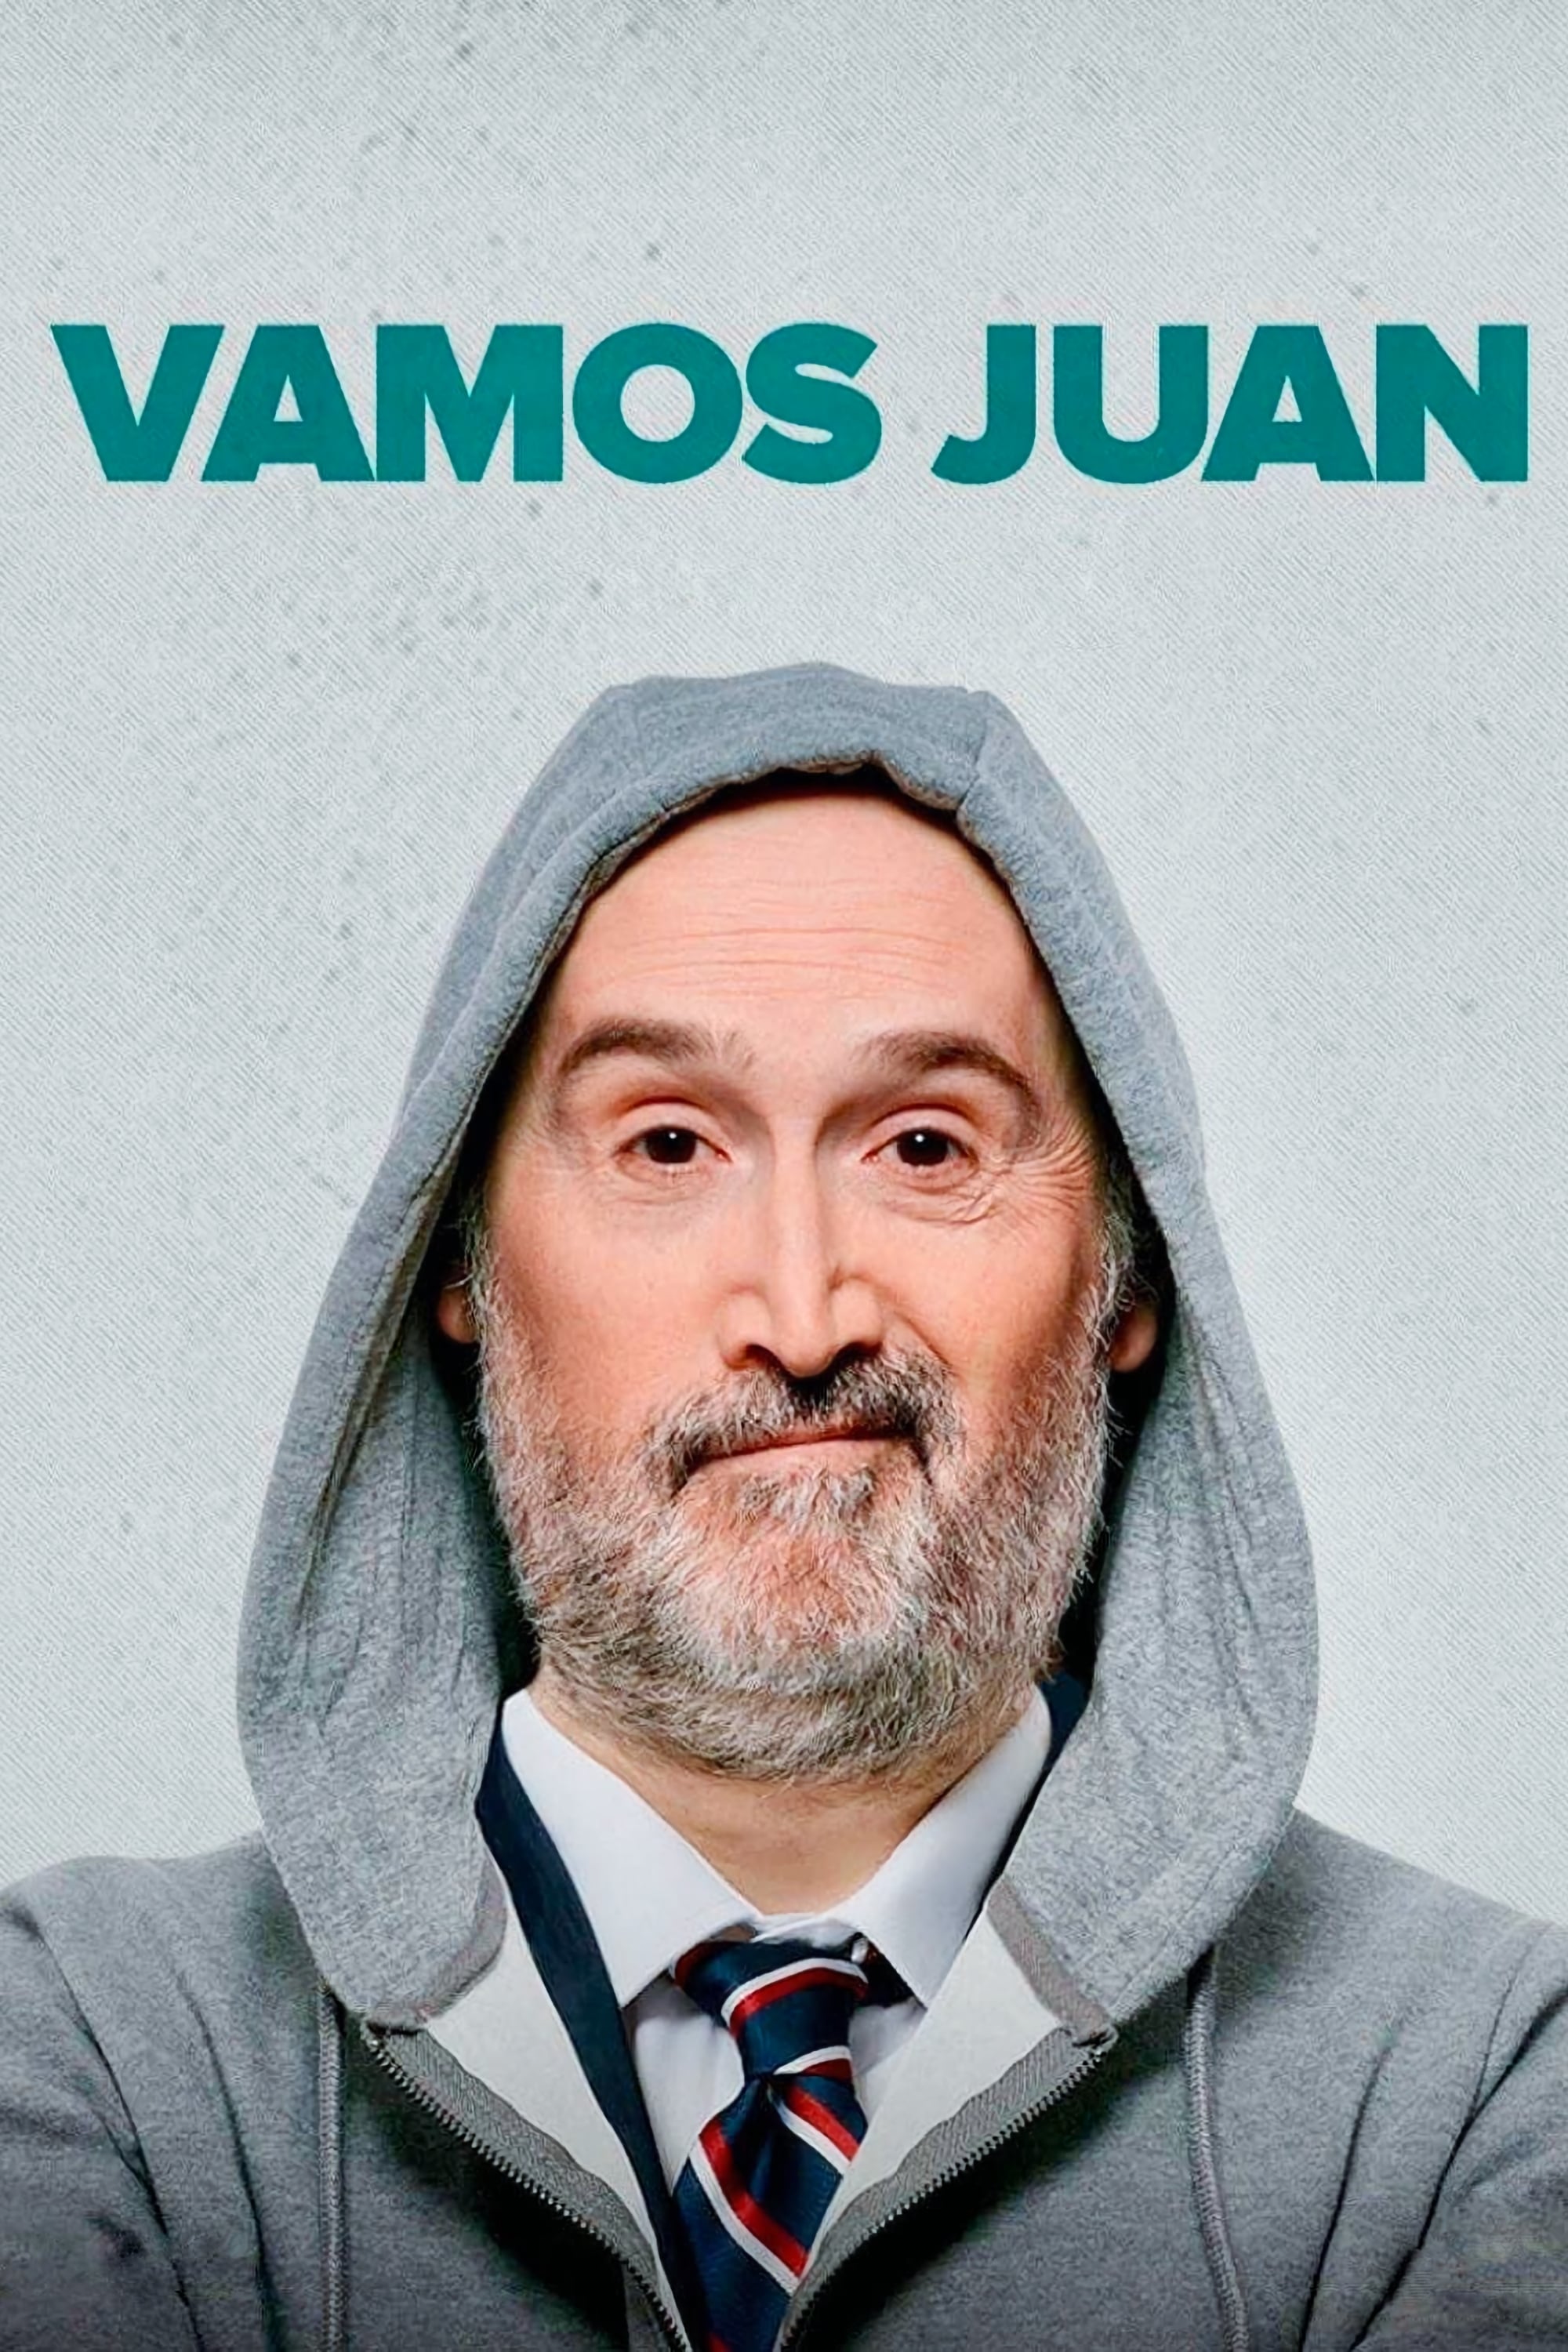 Vamos Juan TV Shows About Spain